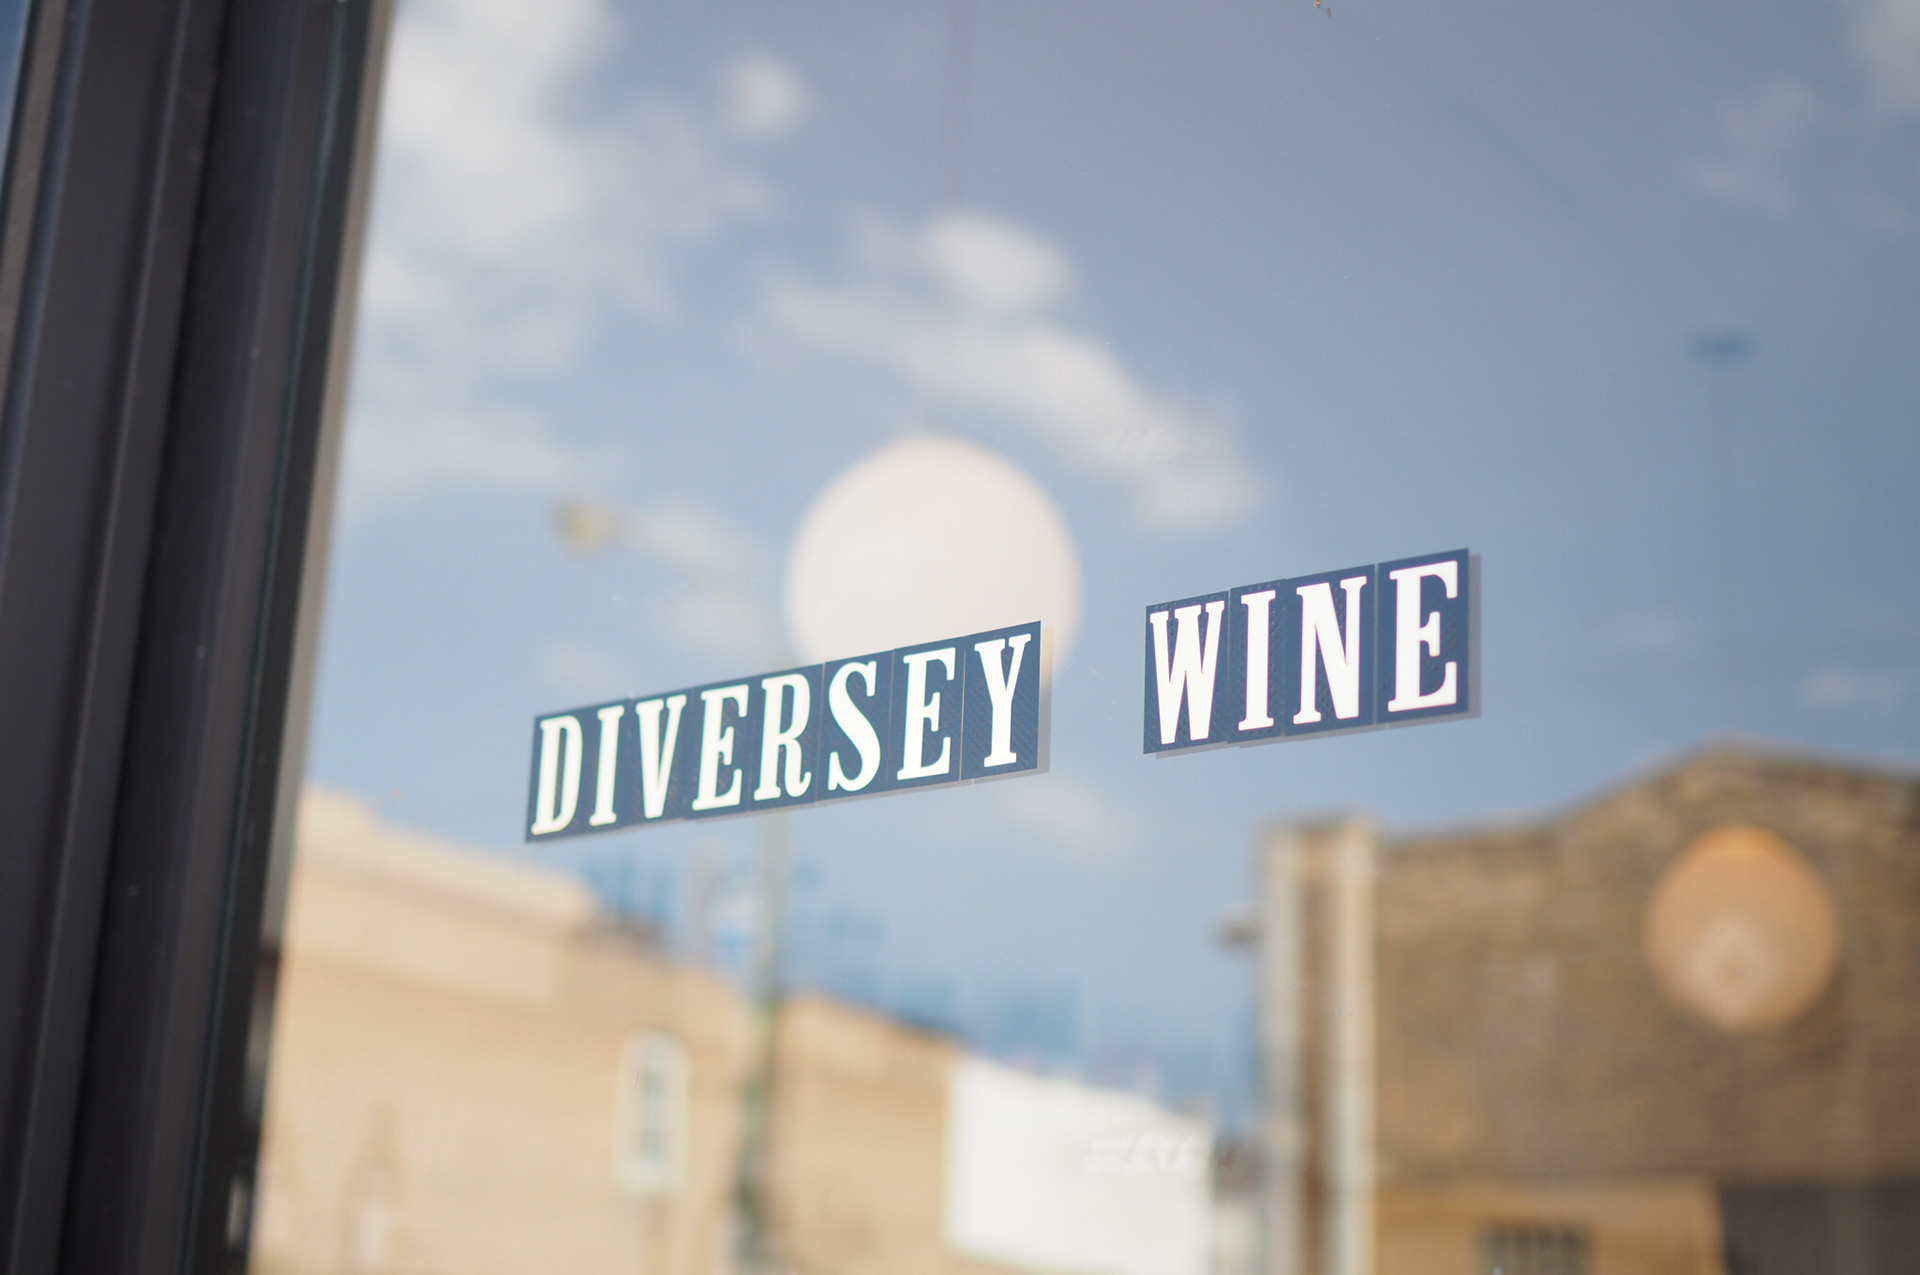 diversey wine chicago illinois